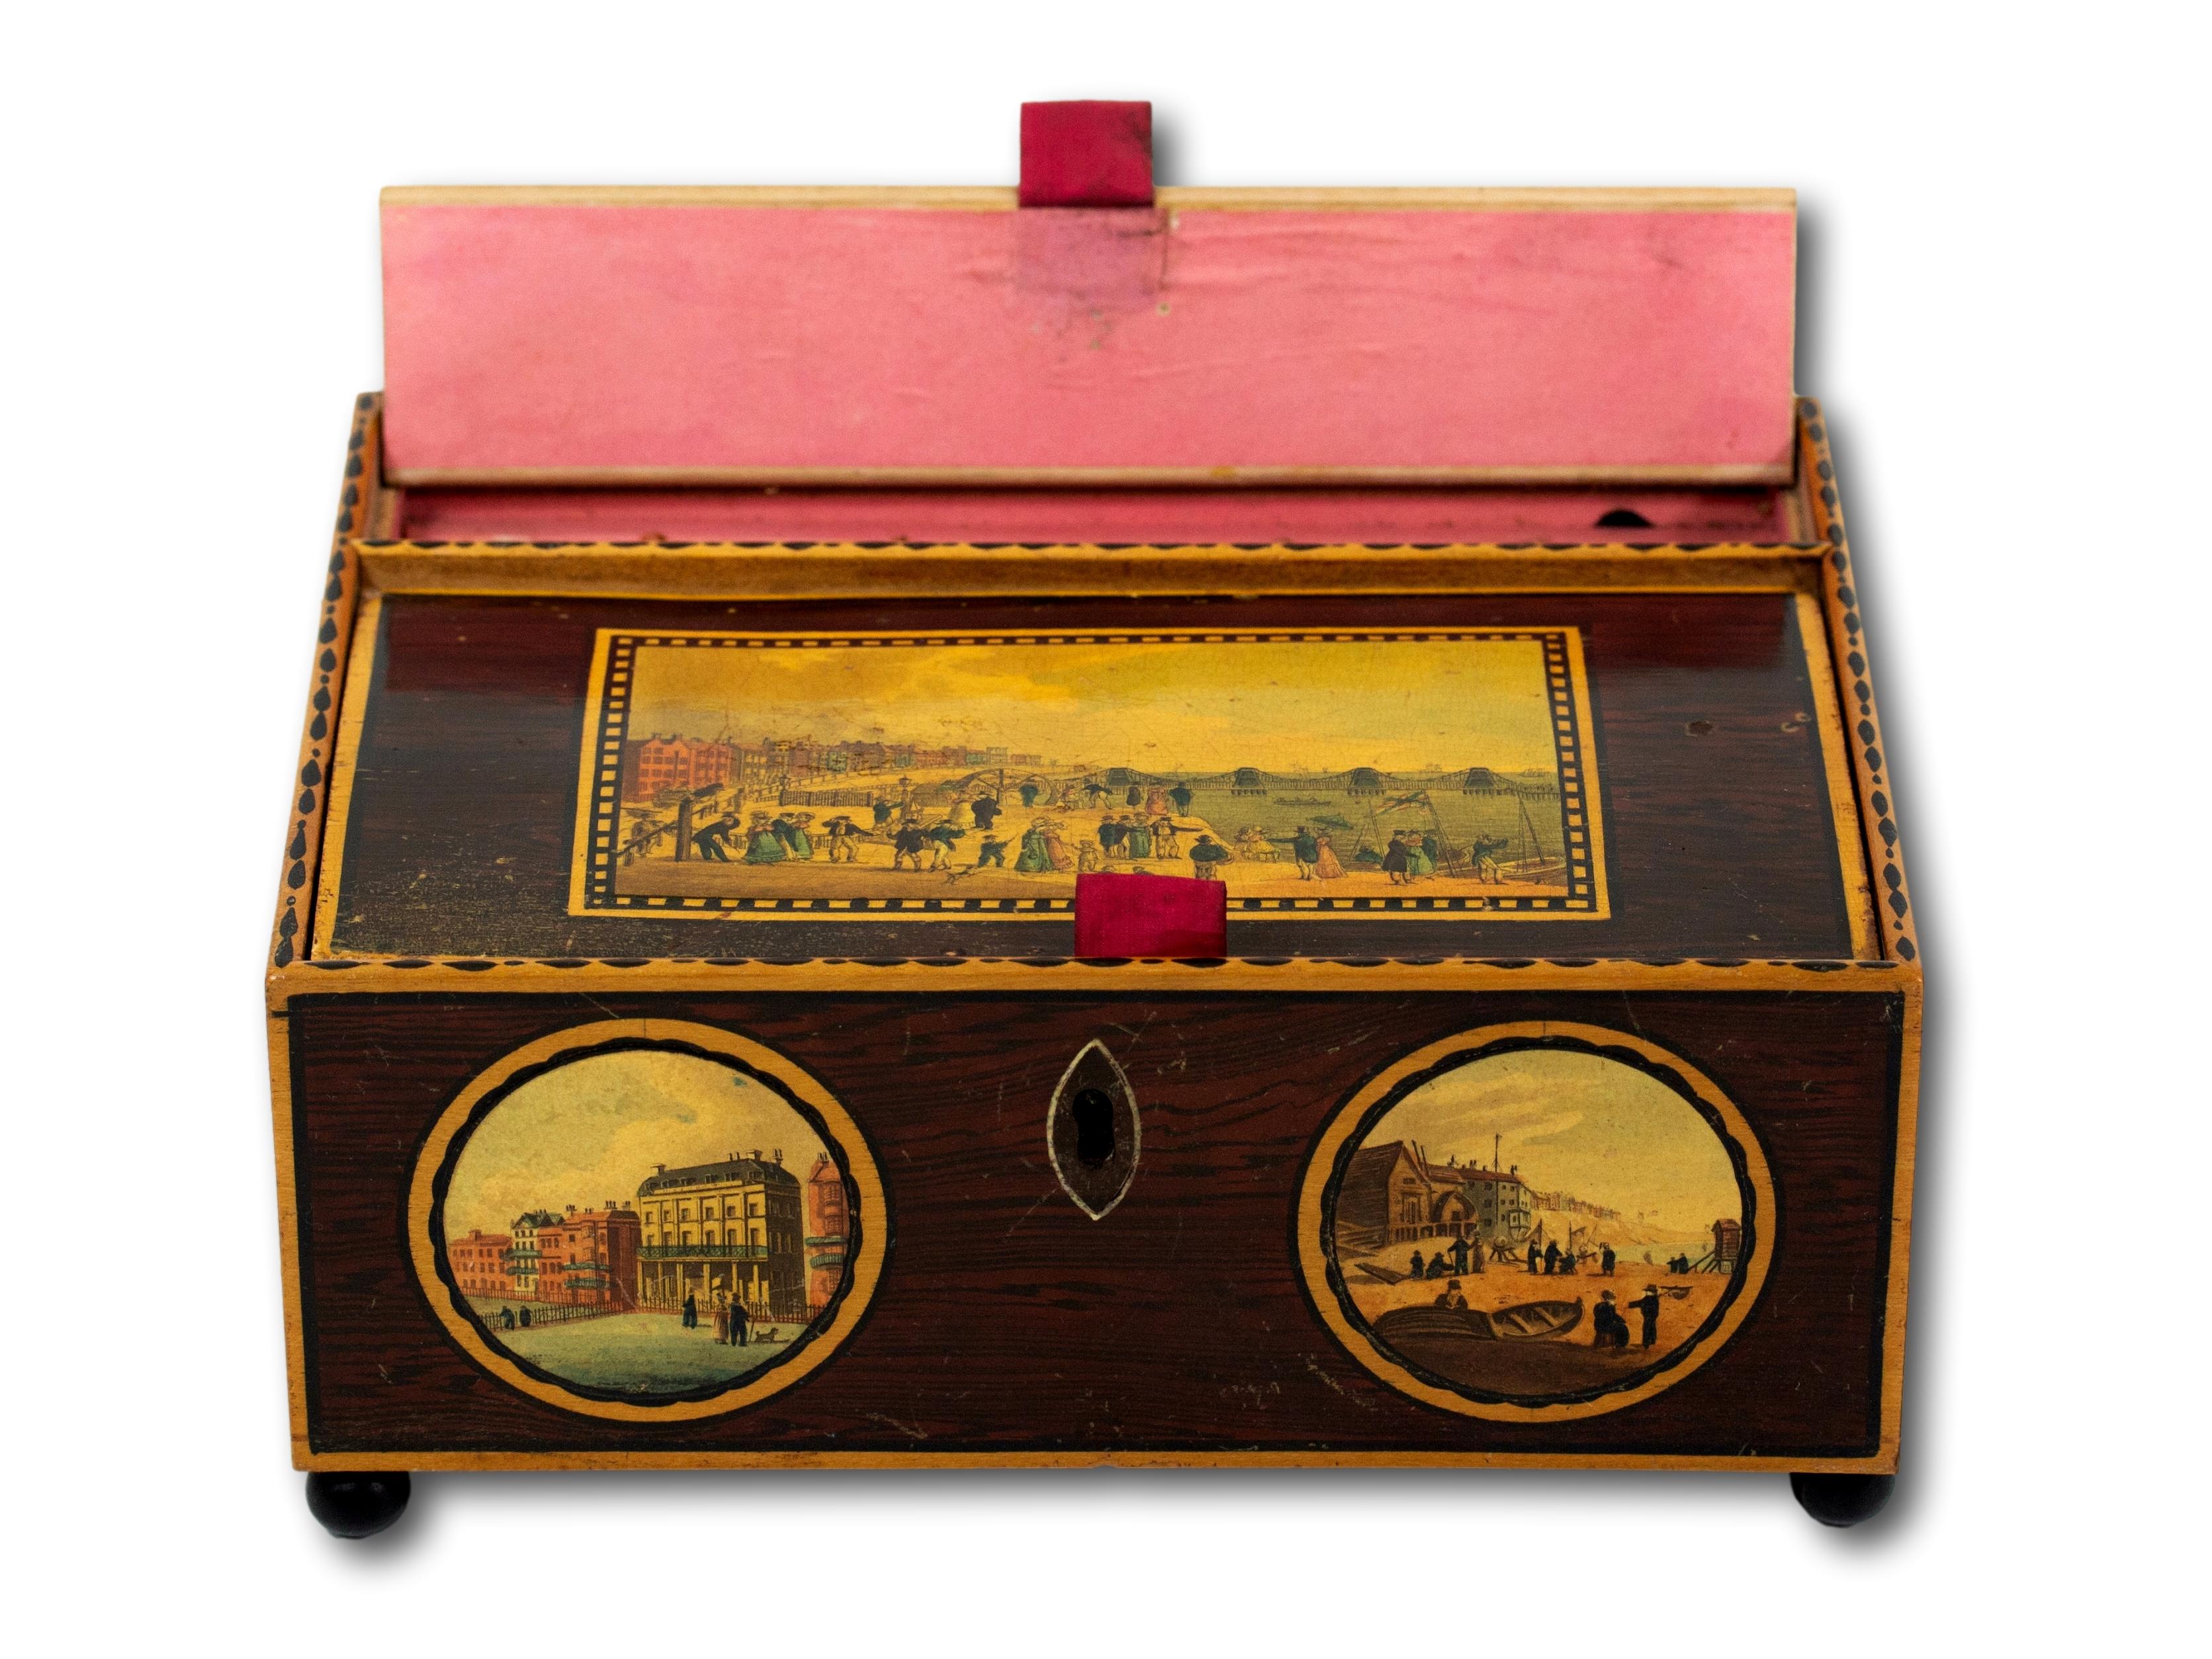 19th Century Tunbridge Ware Sewing Box